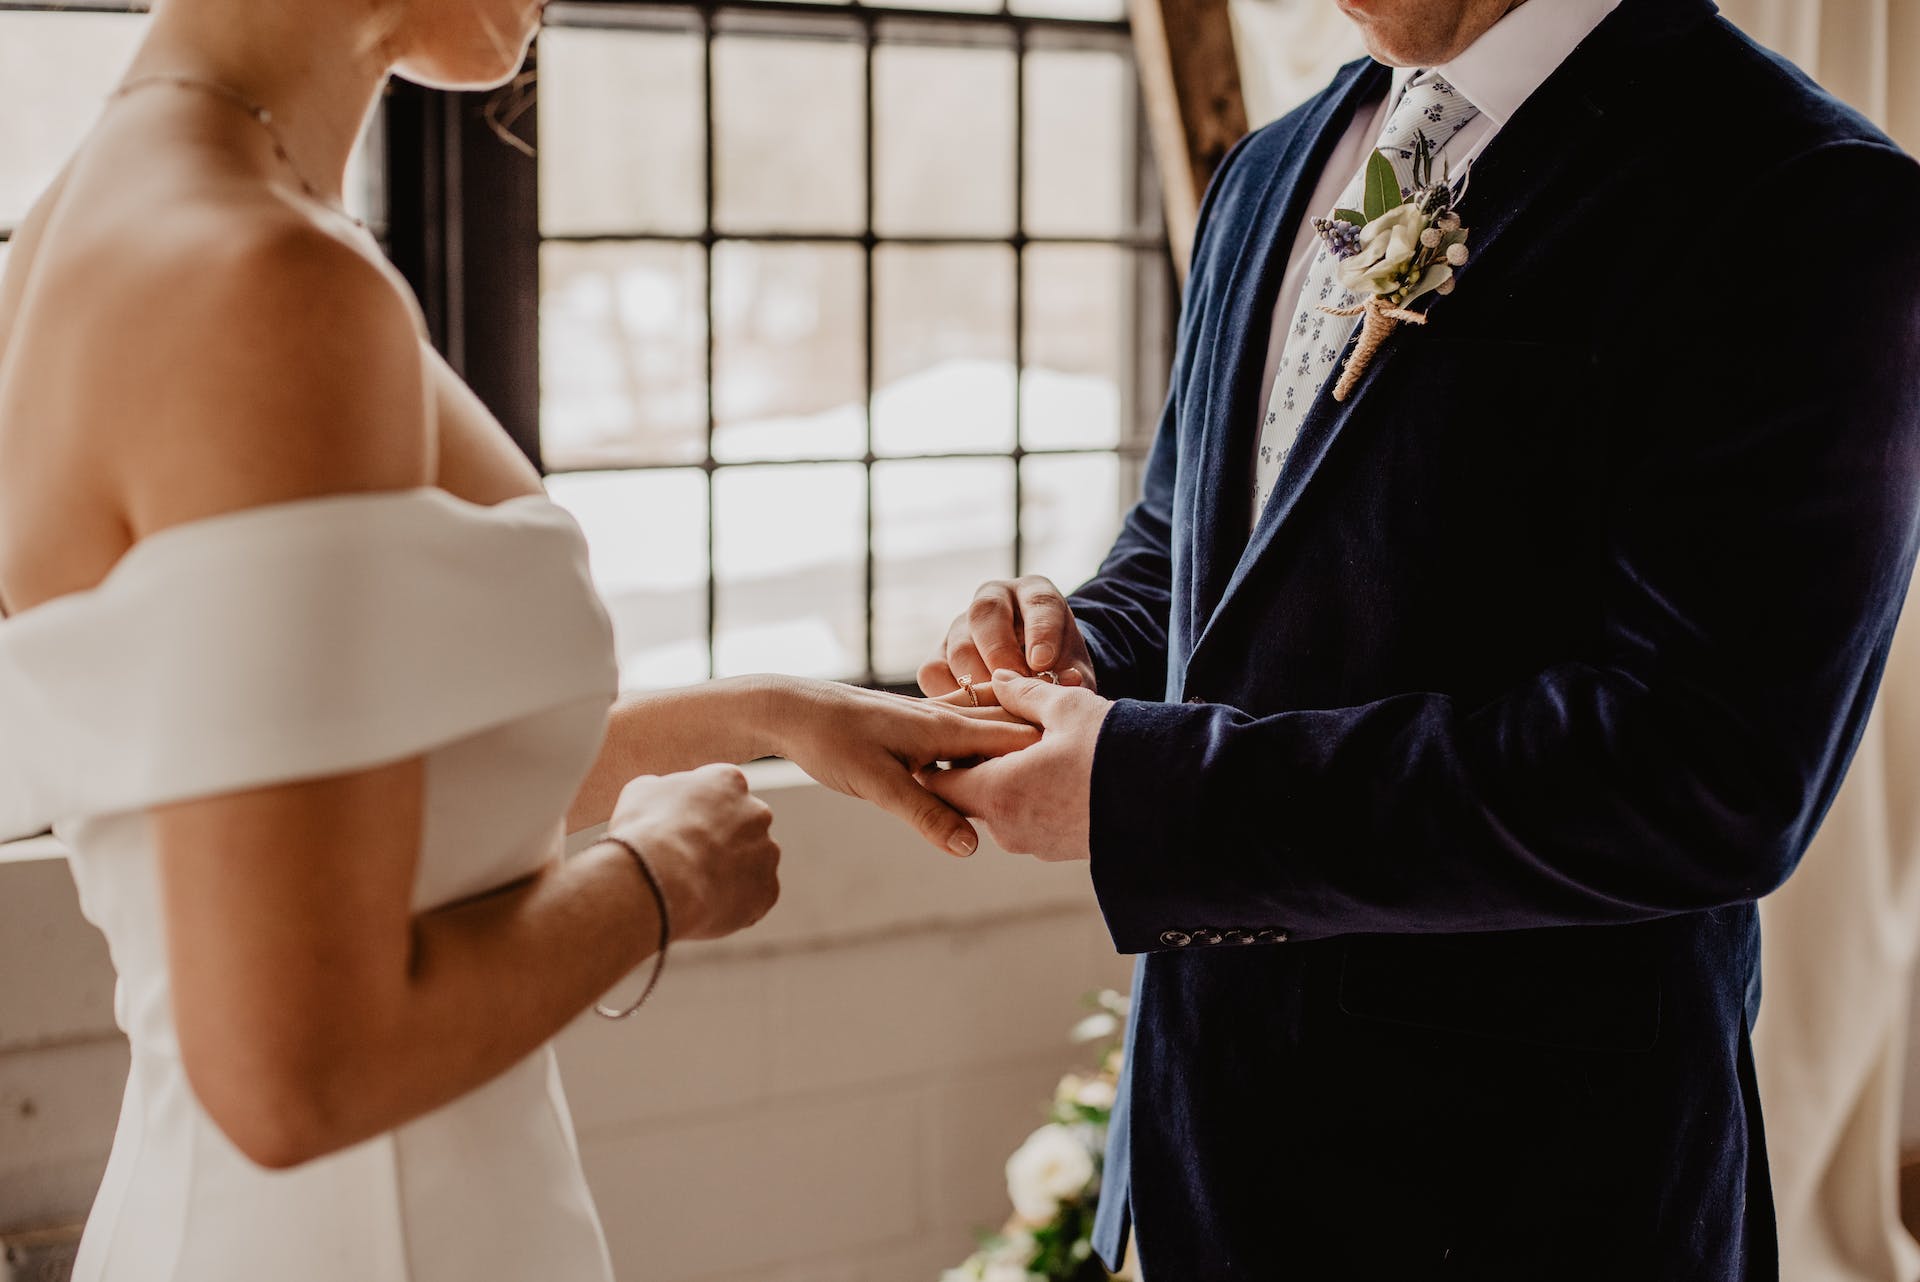 A bride and groom | Source: Pexels